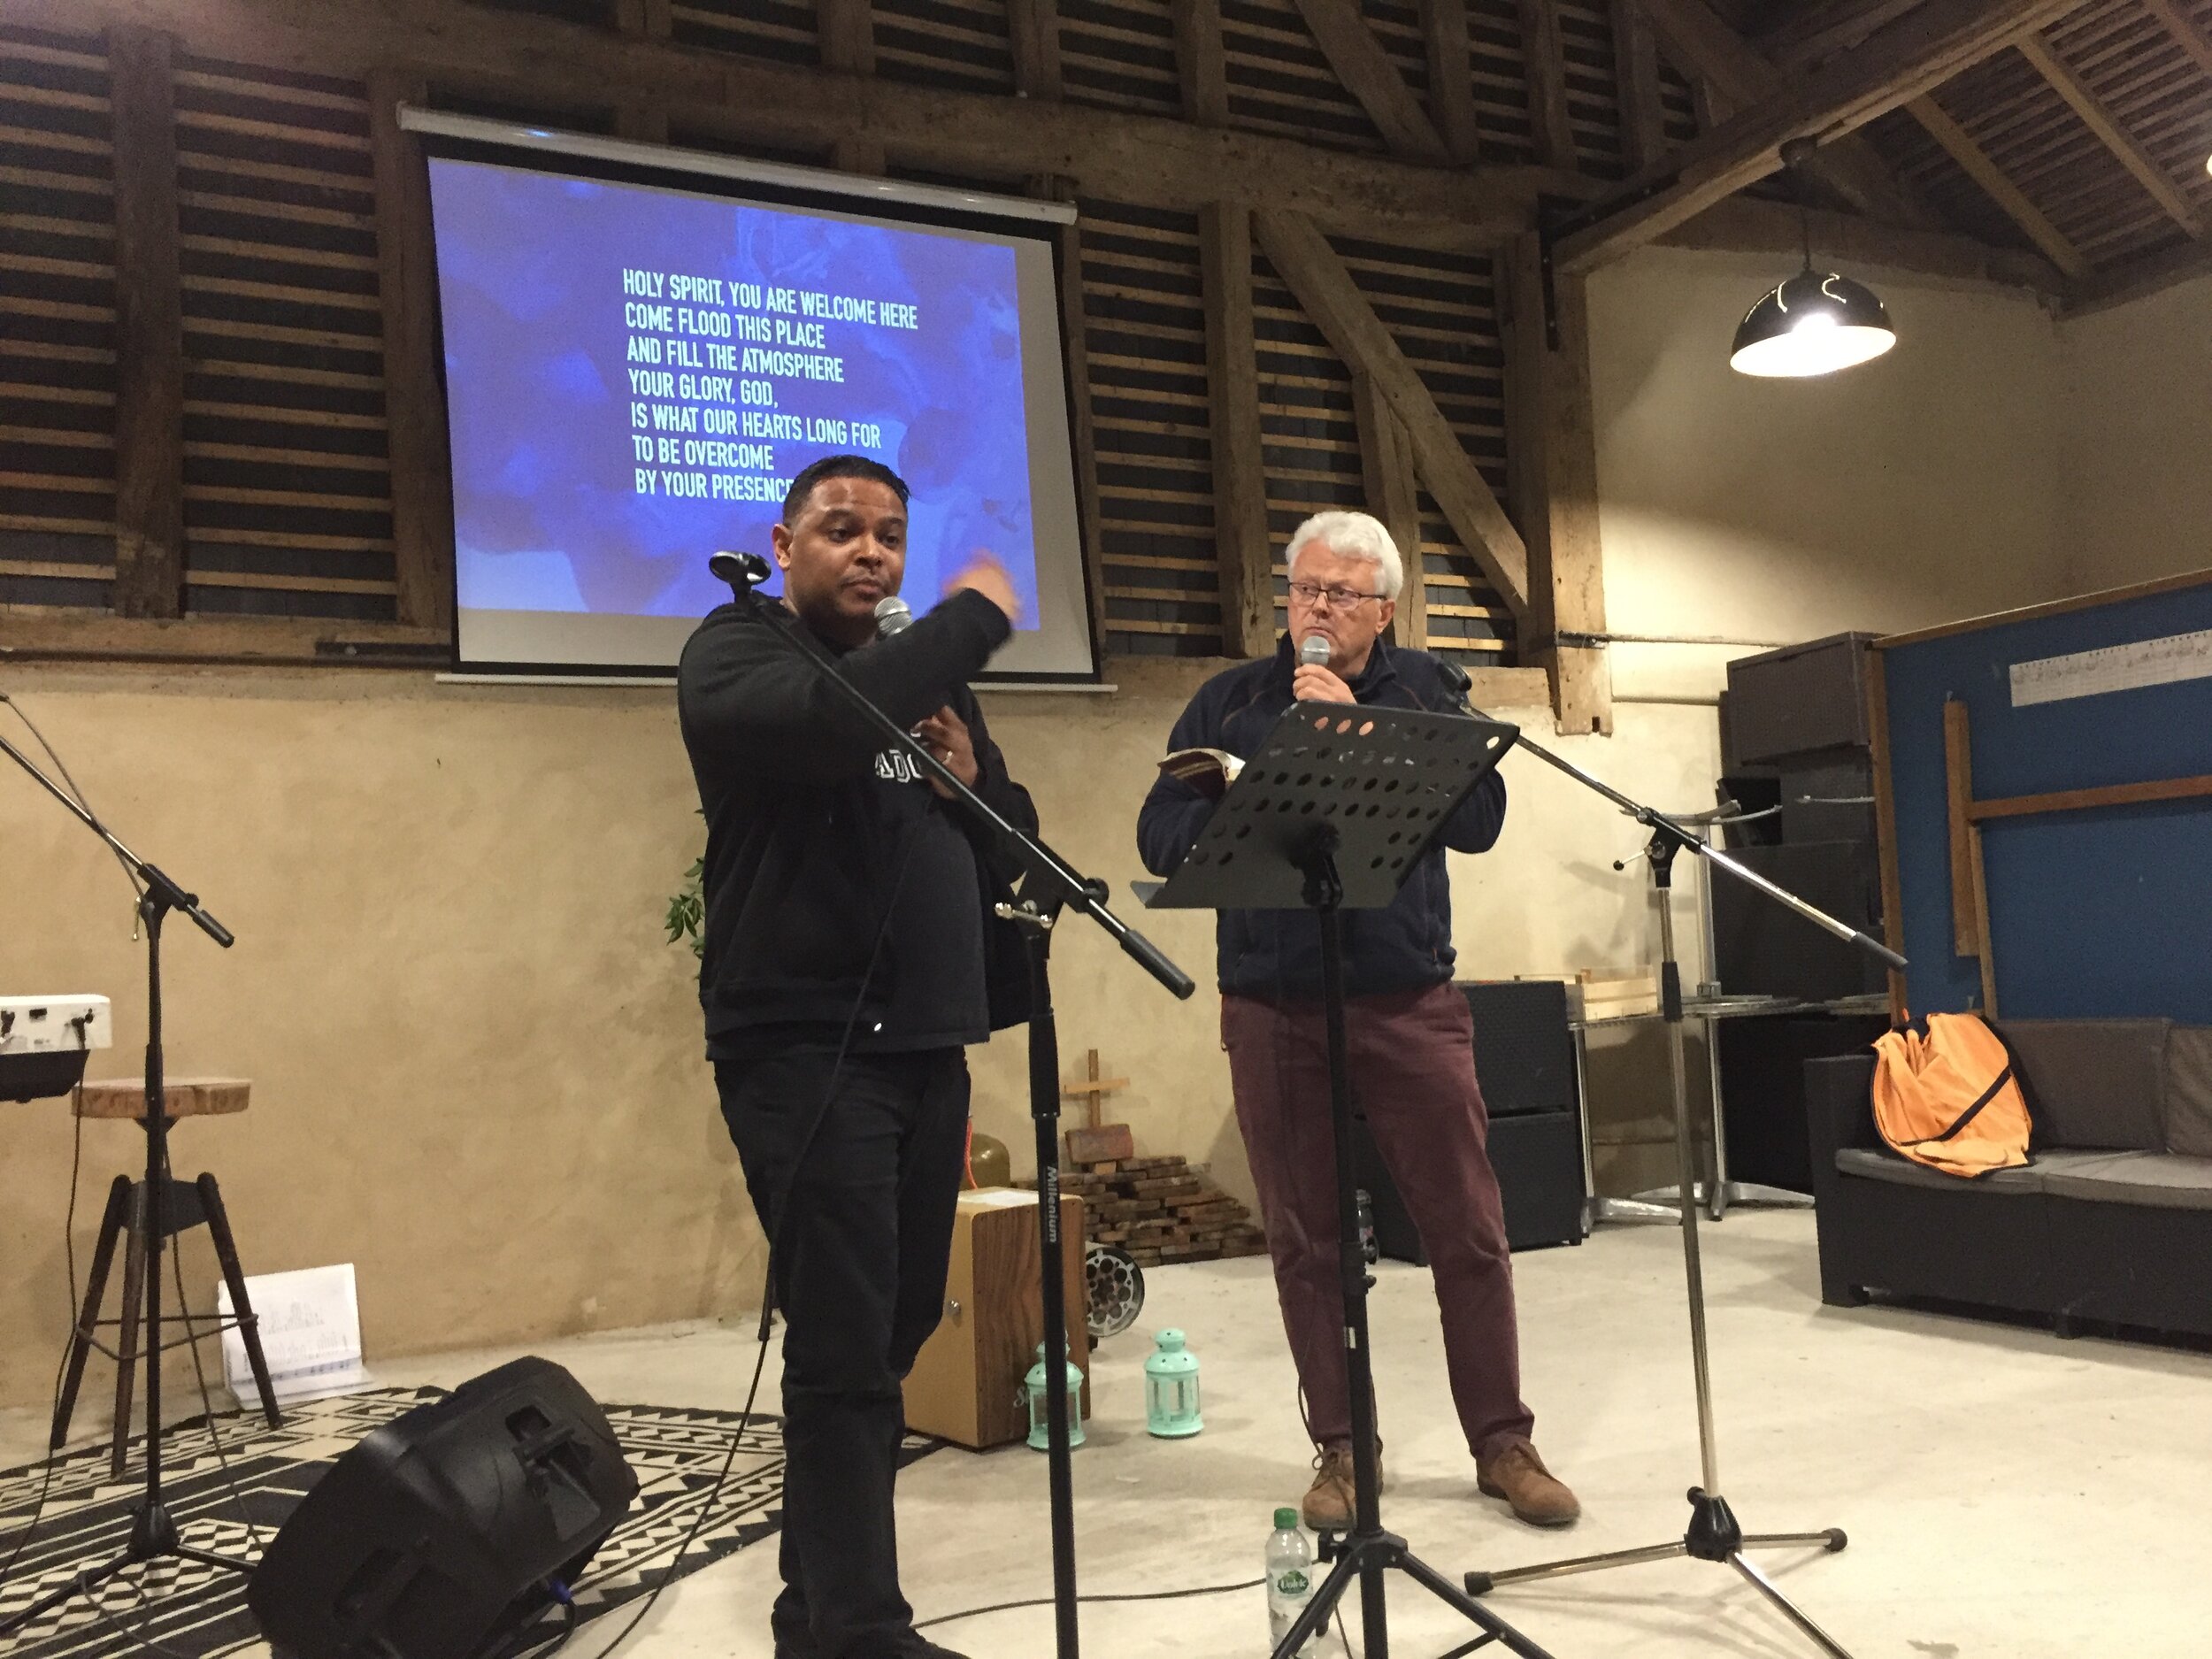 Jonathan Manou preaching with Gary Wright translating